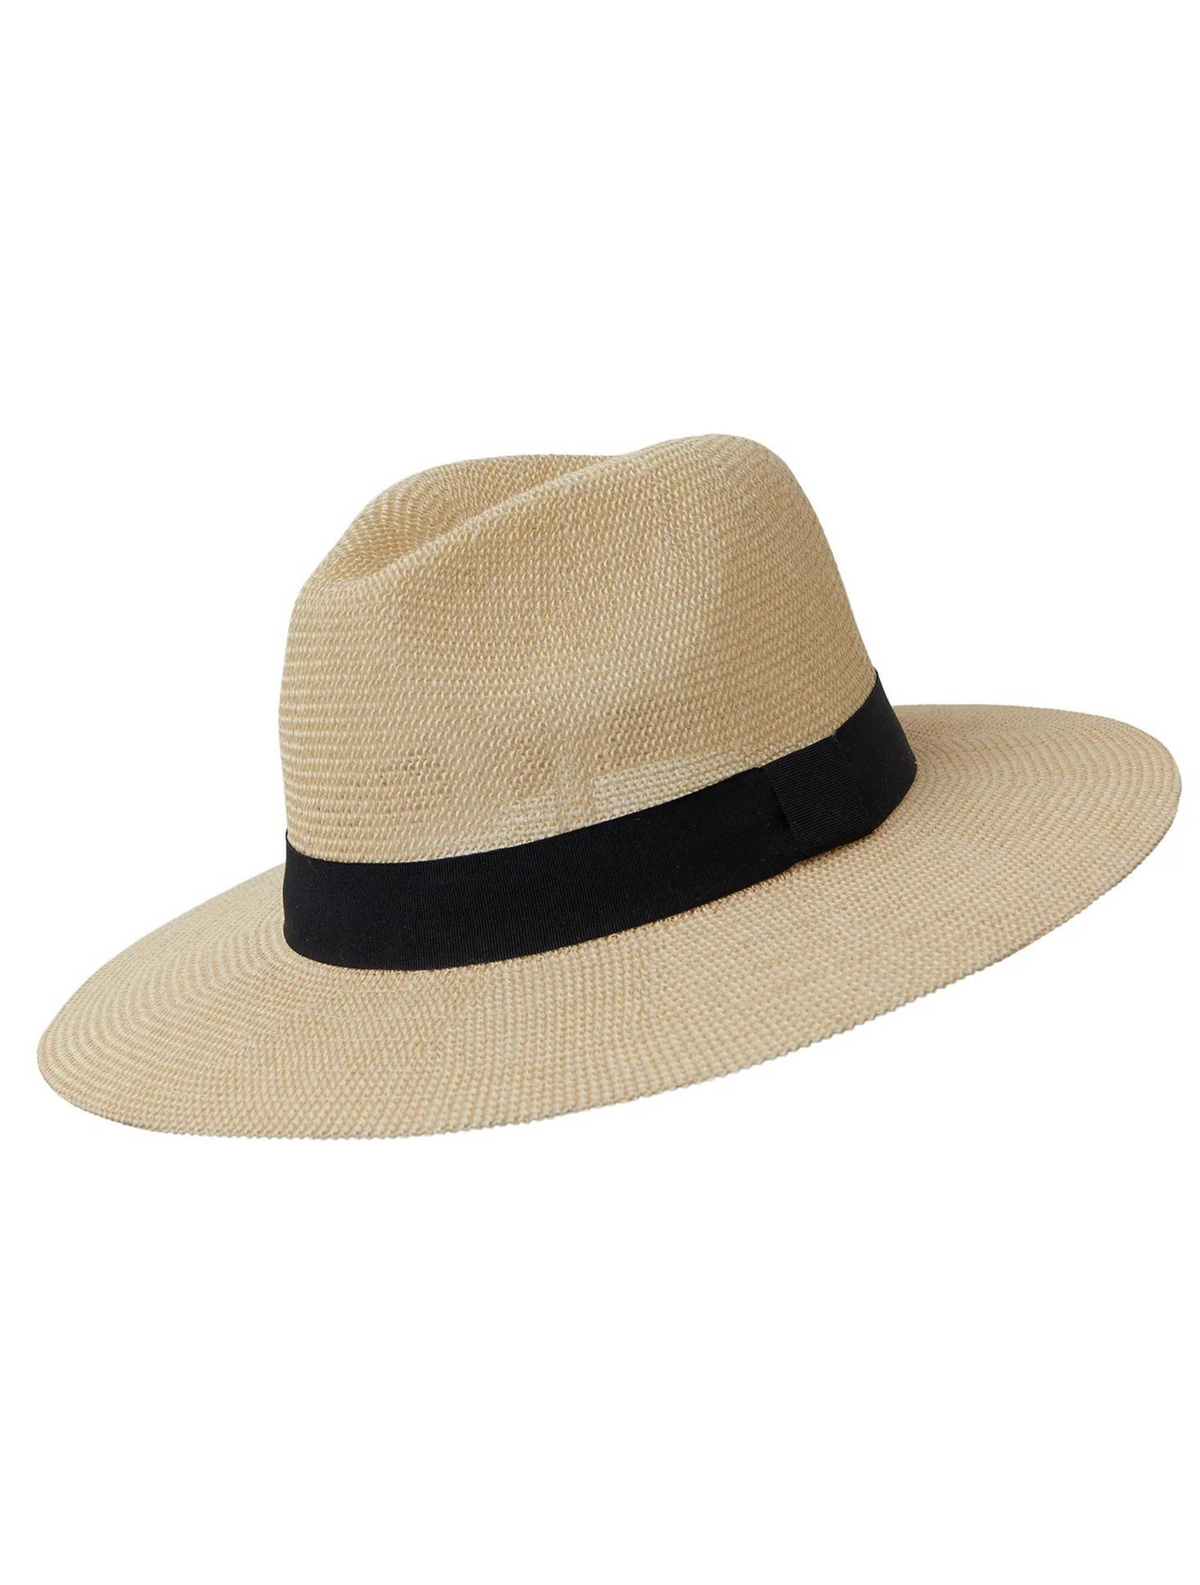 Panama hat with a black ribbon